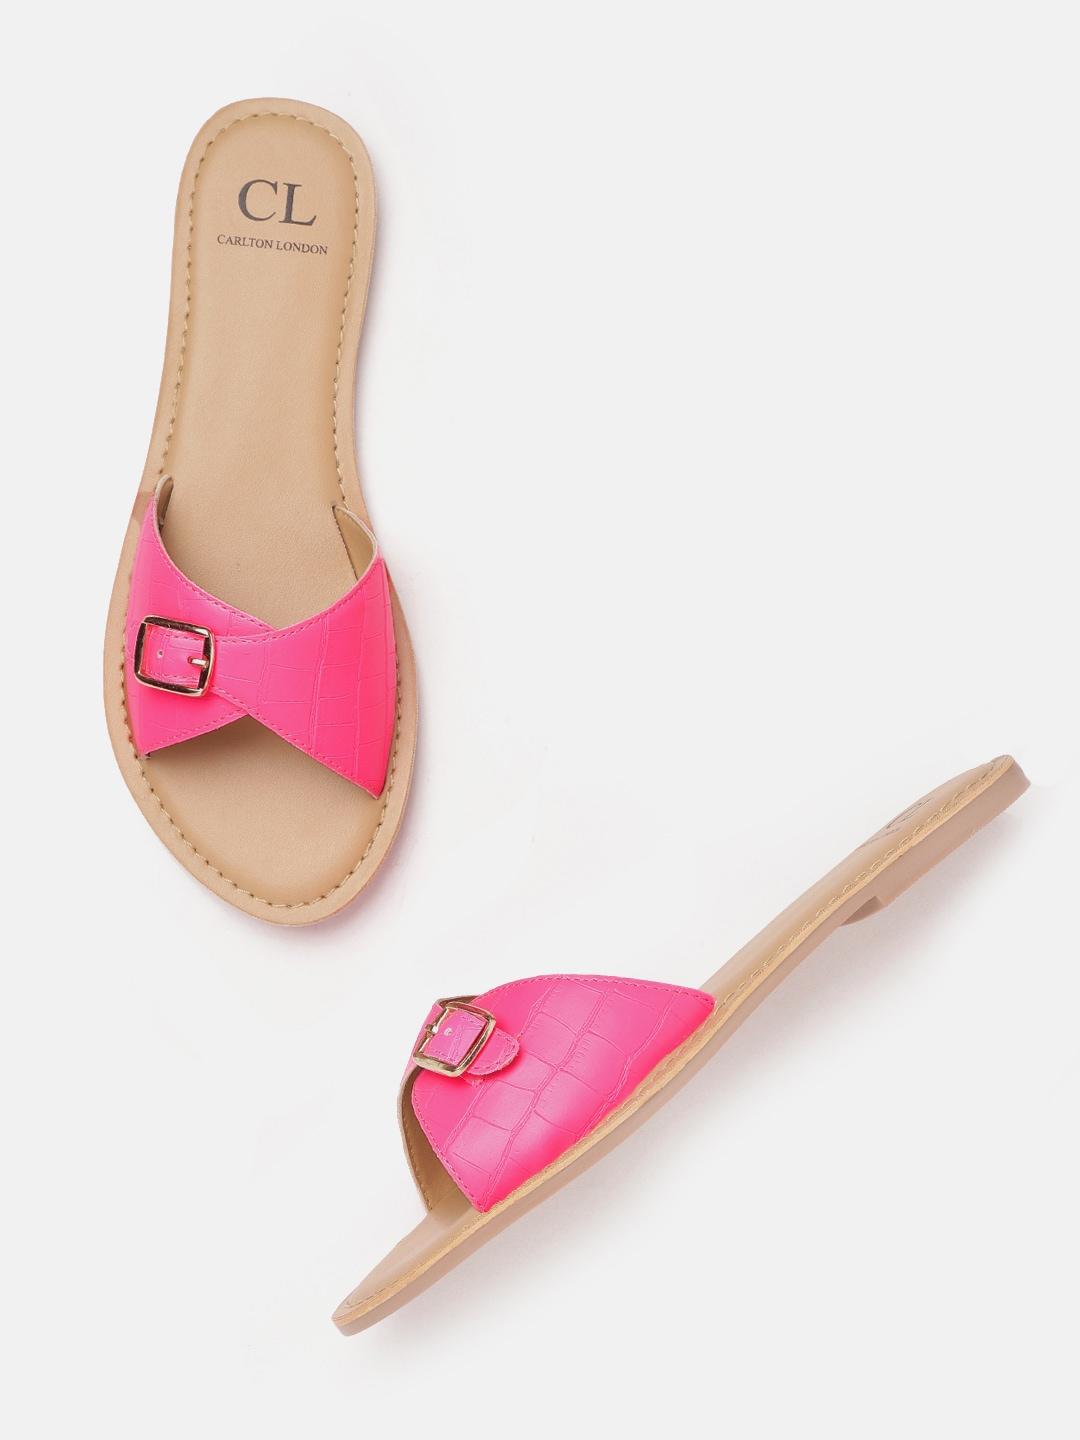 Carlton London Women Pink Croc Textured Flats with Buckles